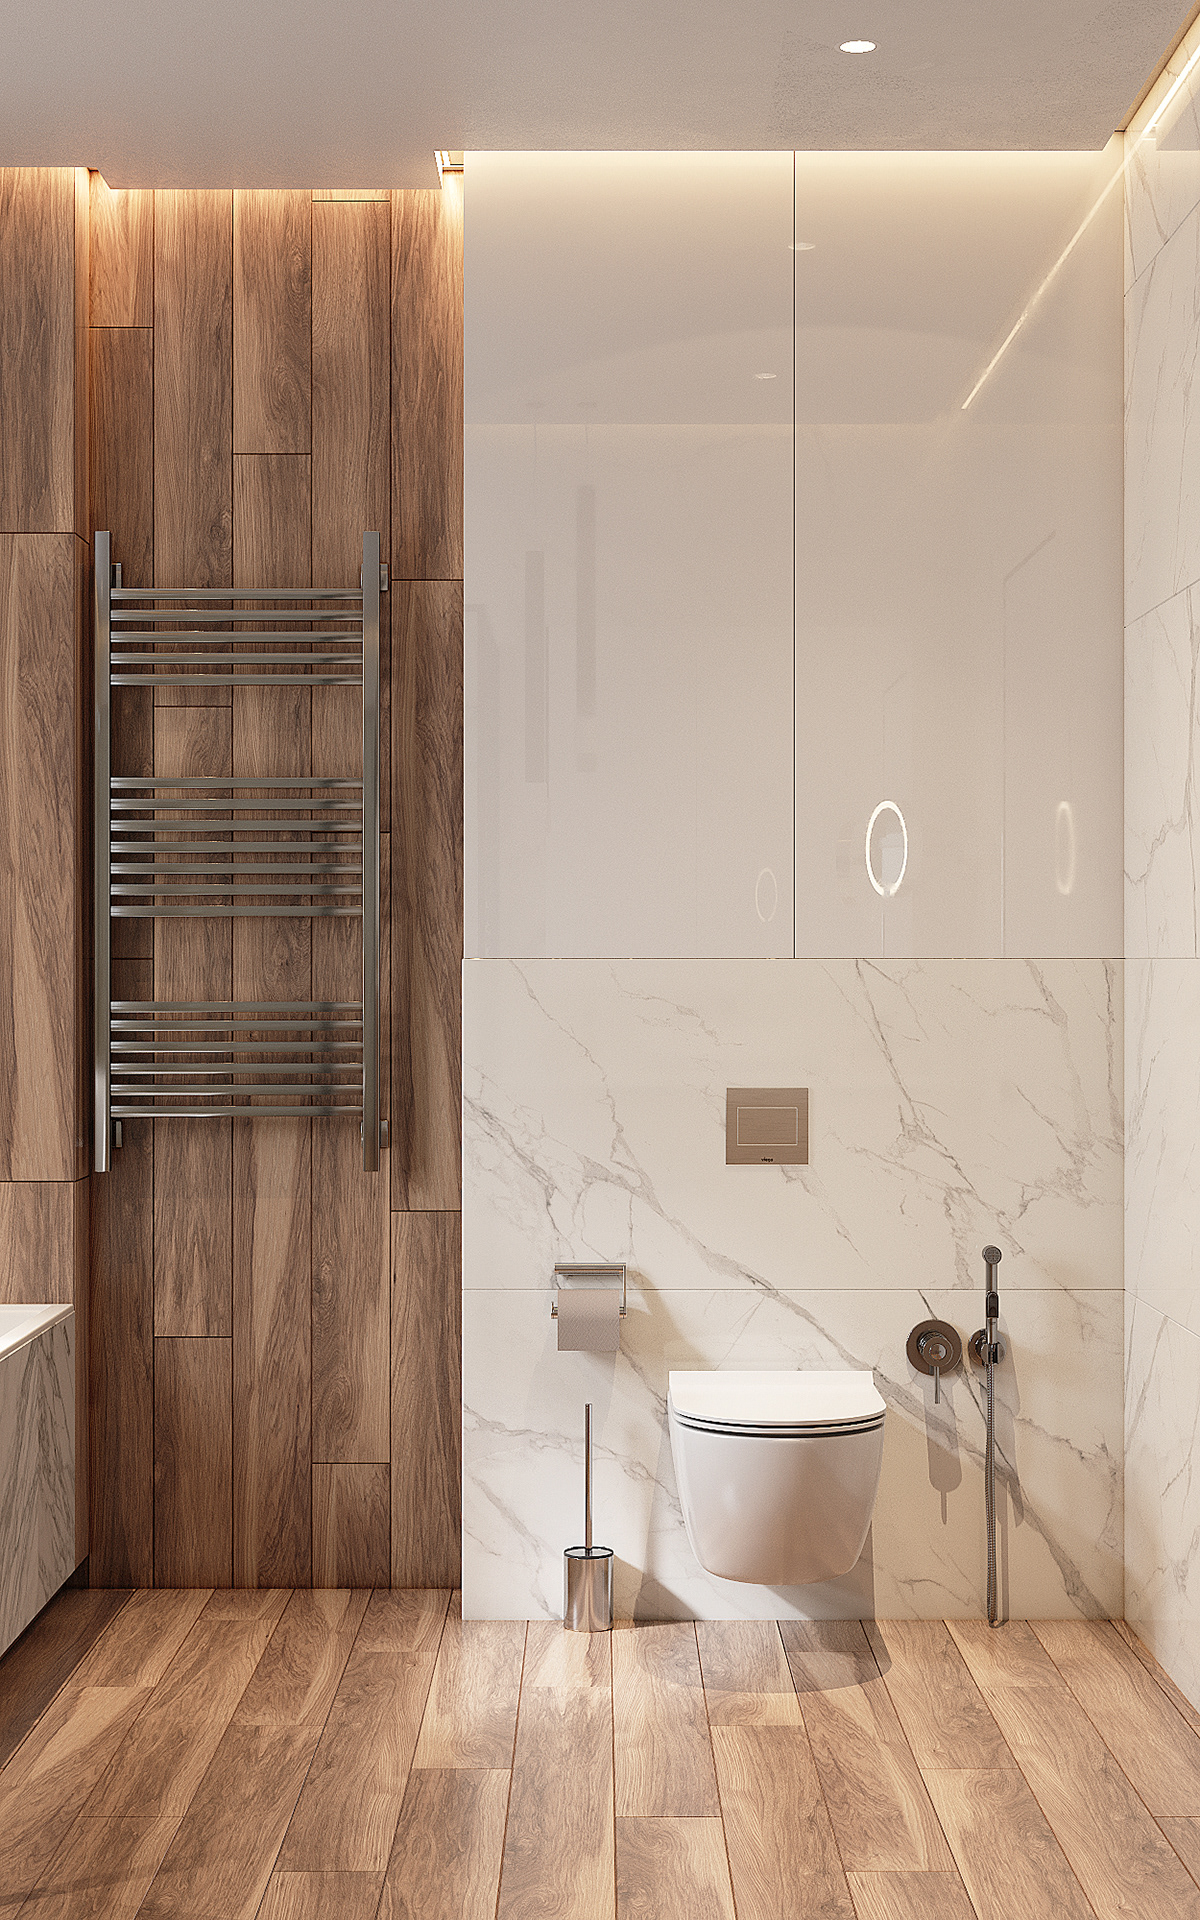 3ds max architecture bathroom accessory cgartist CGI interior design  Irpin ukraine ukrainian design visualization